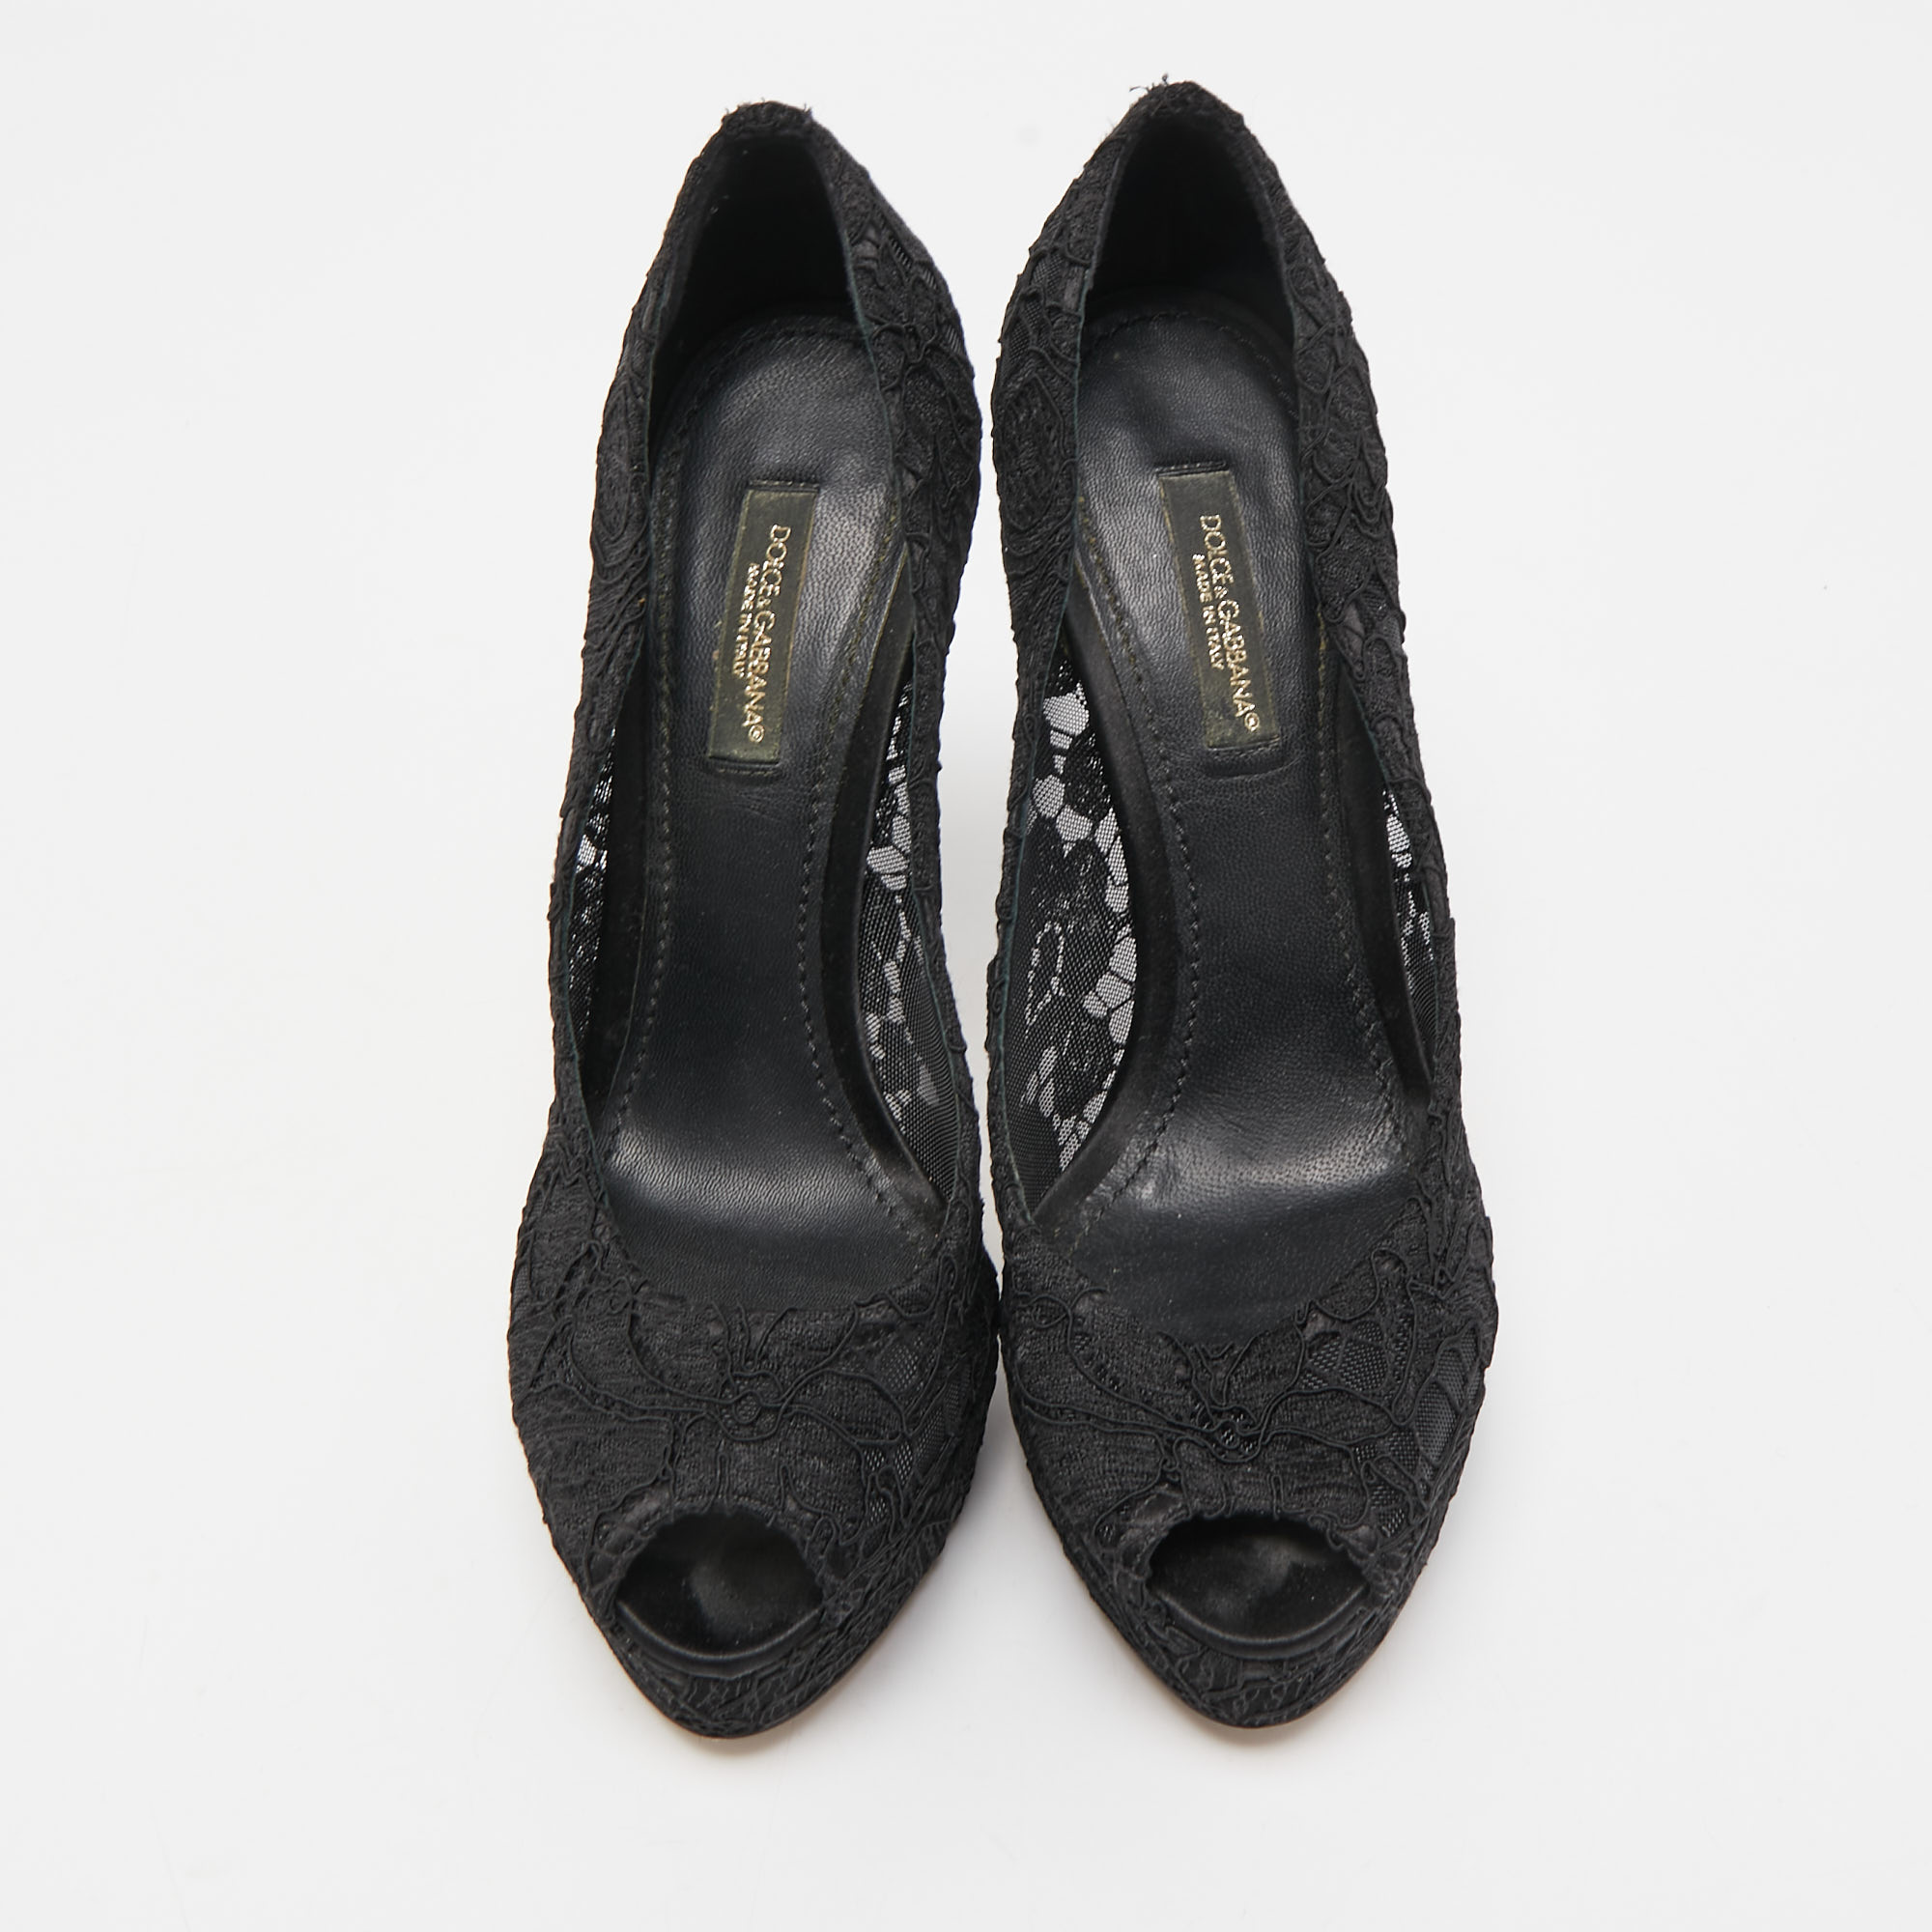 Dolce & Gabbana Black Satin And Lace Peep Toe Platform Pumps Size 36